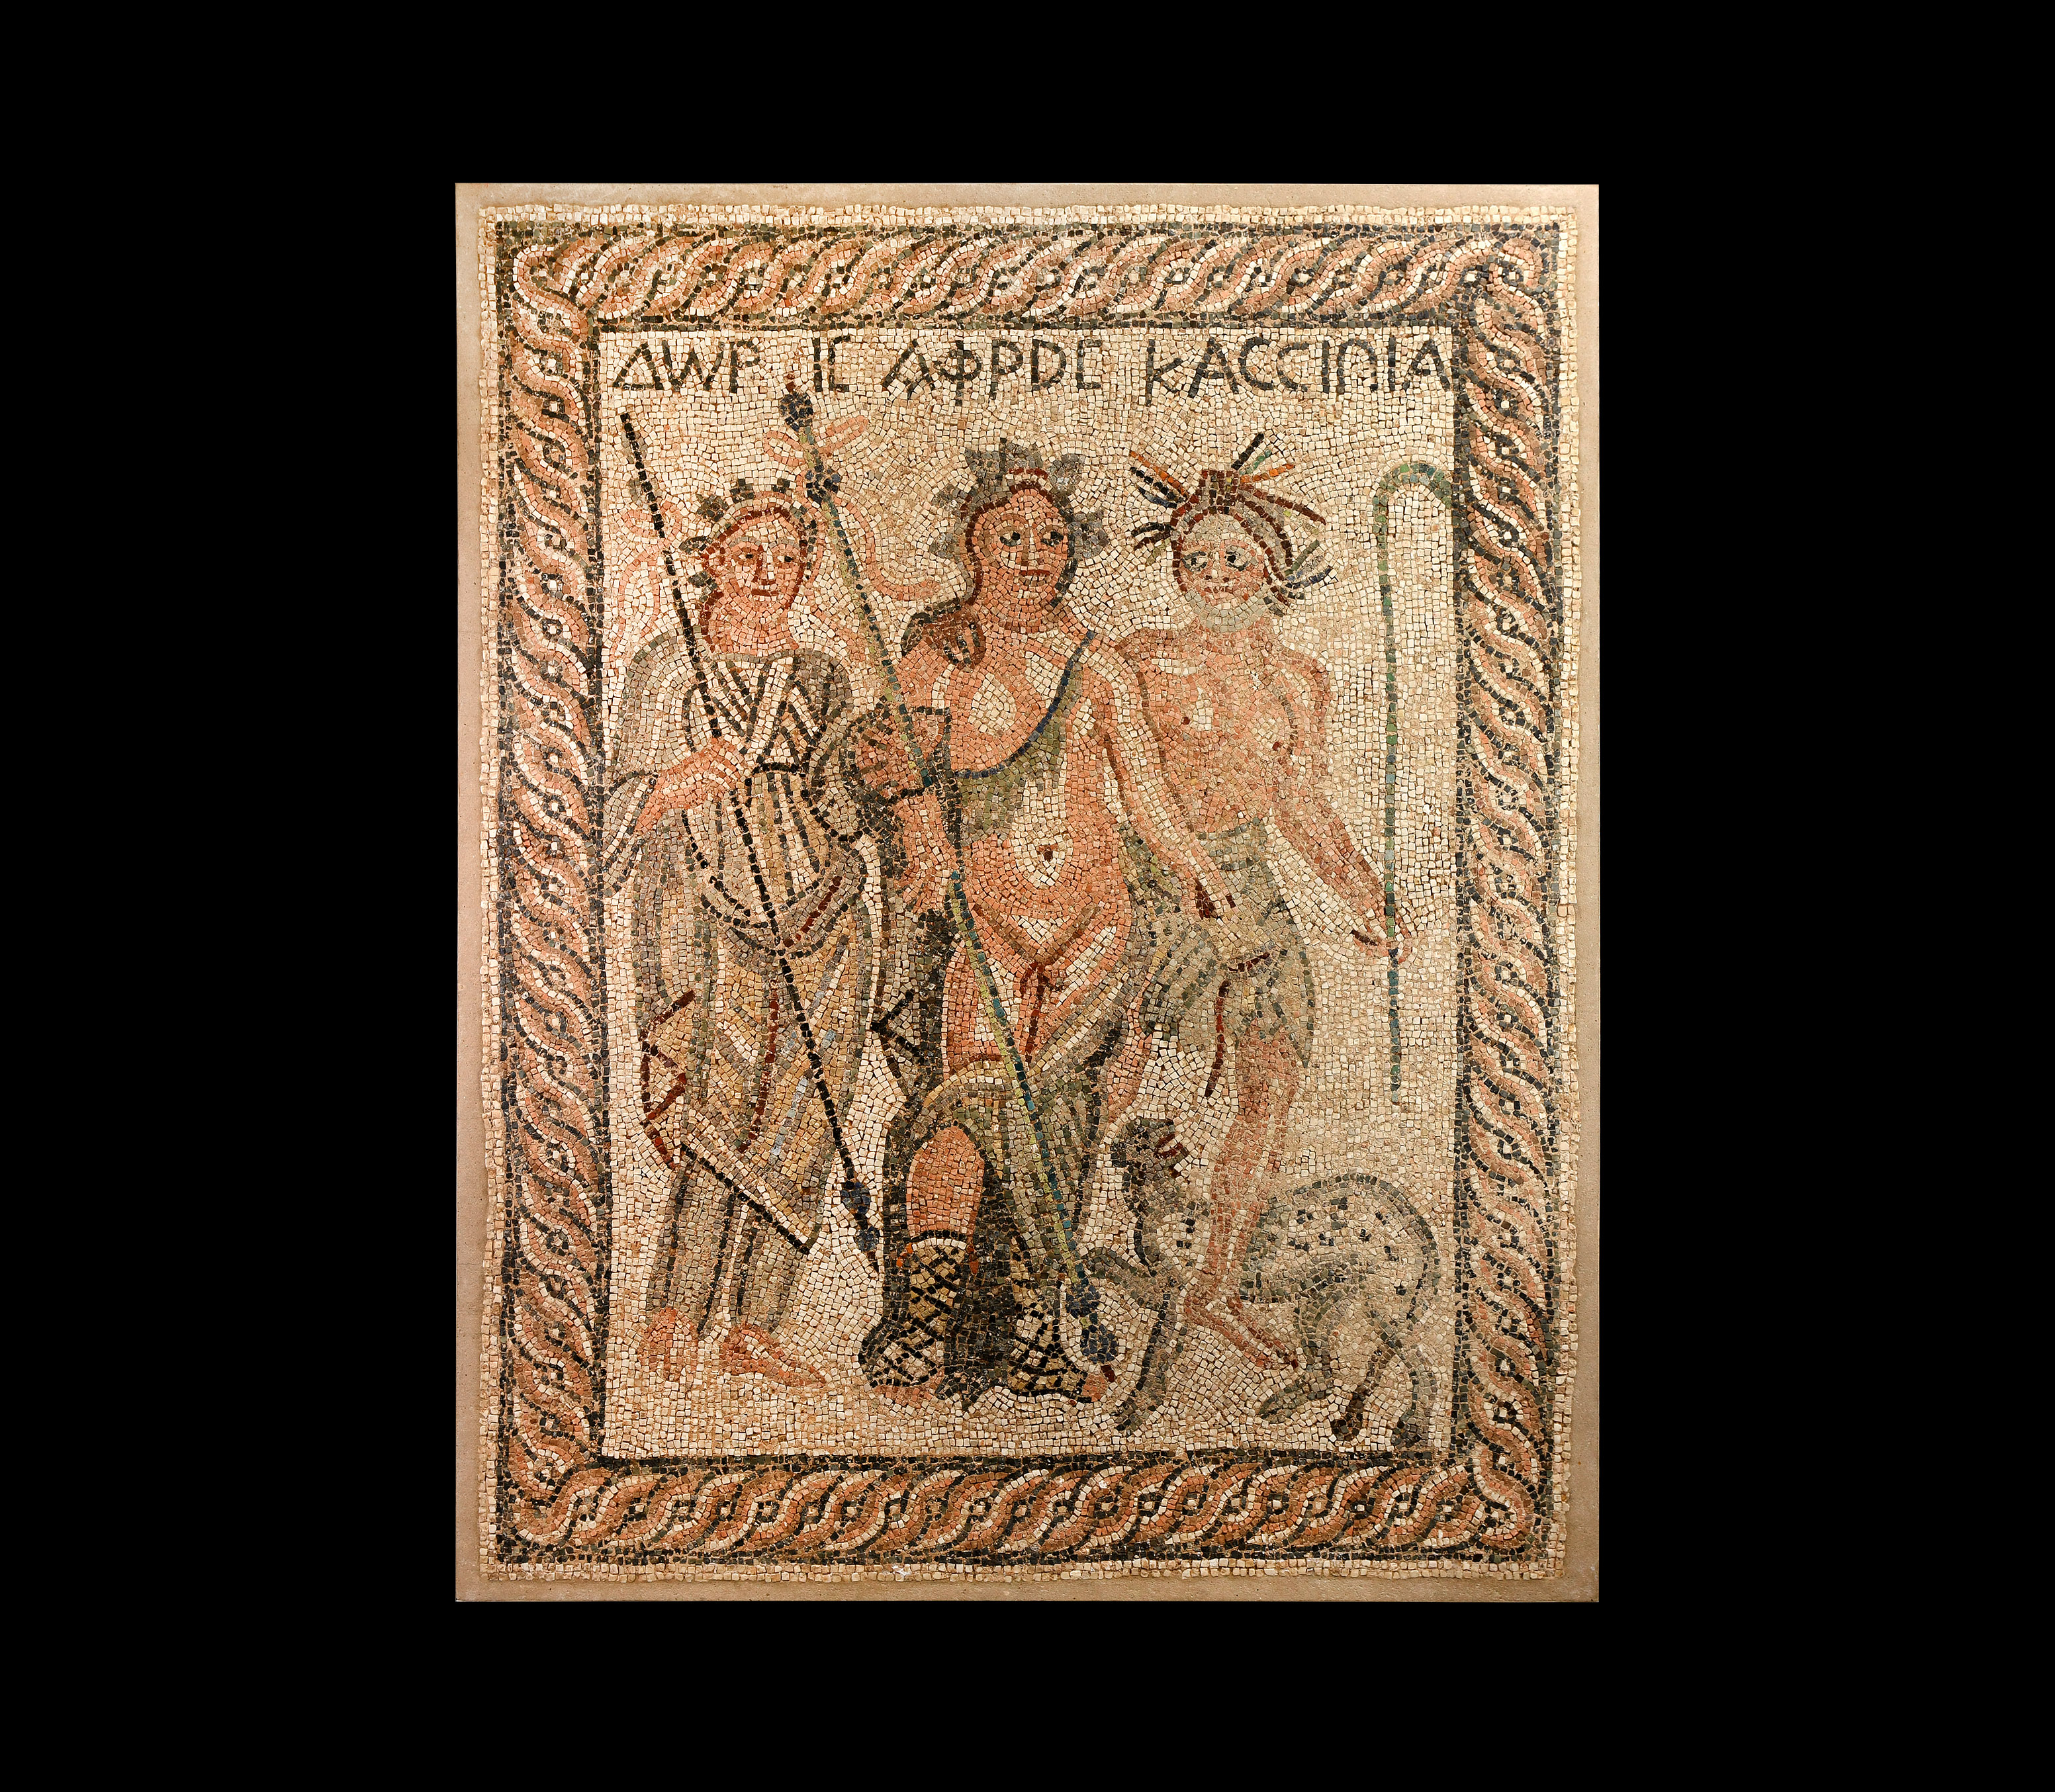 Roman Mosaic with Aphrodite and Nymph Doris